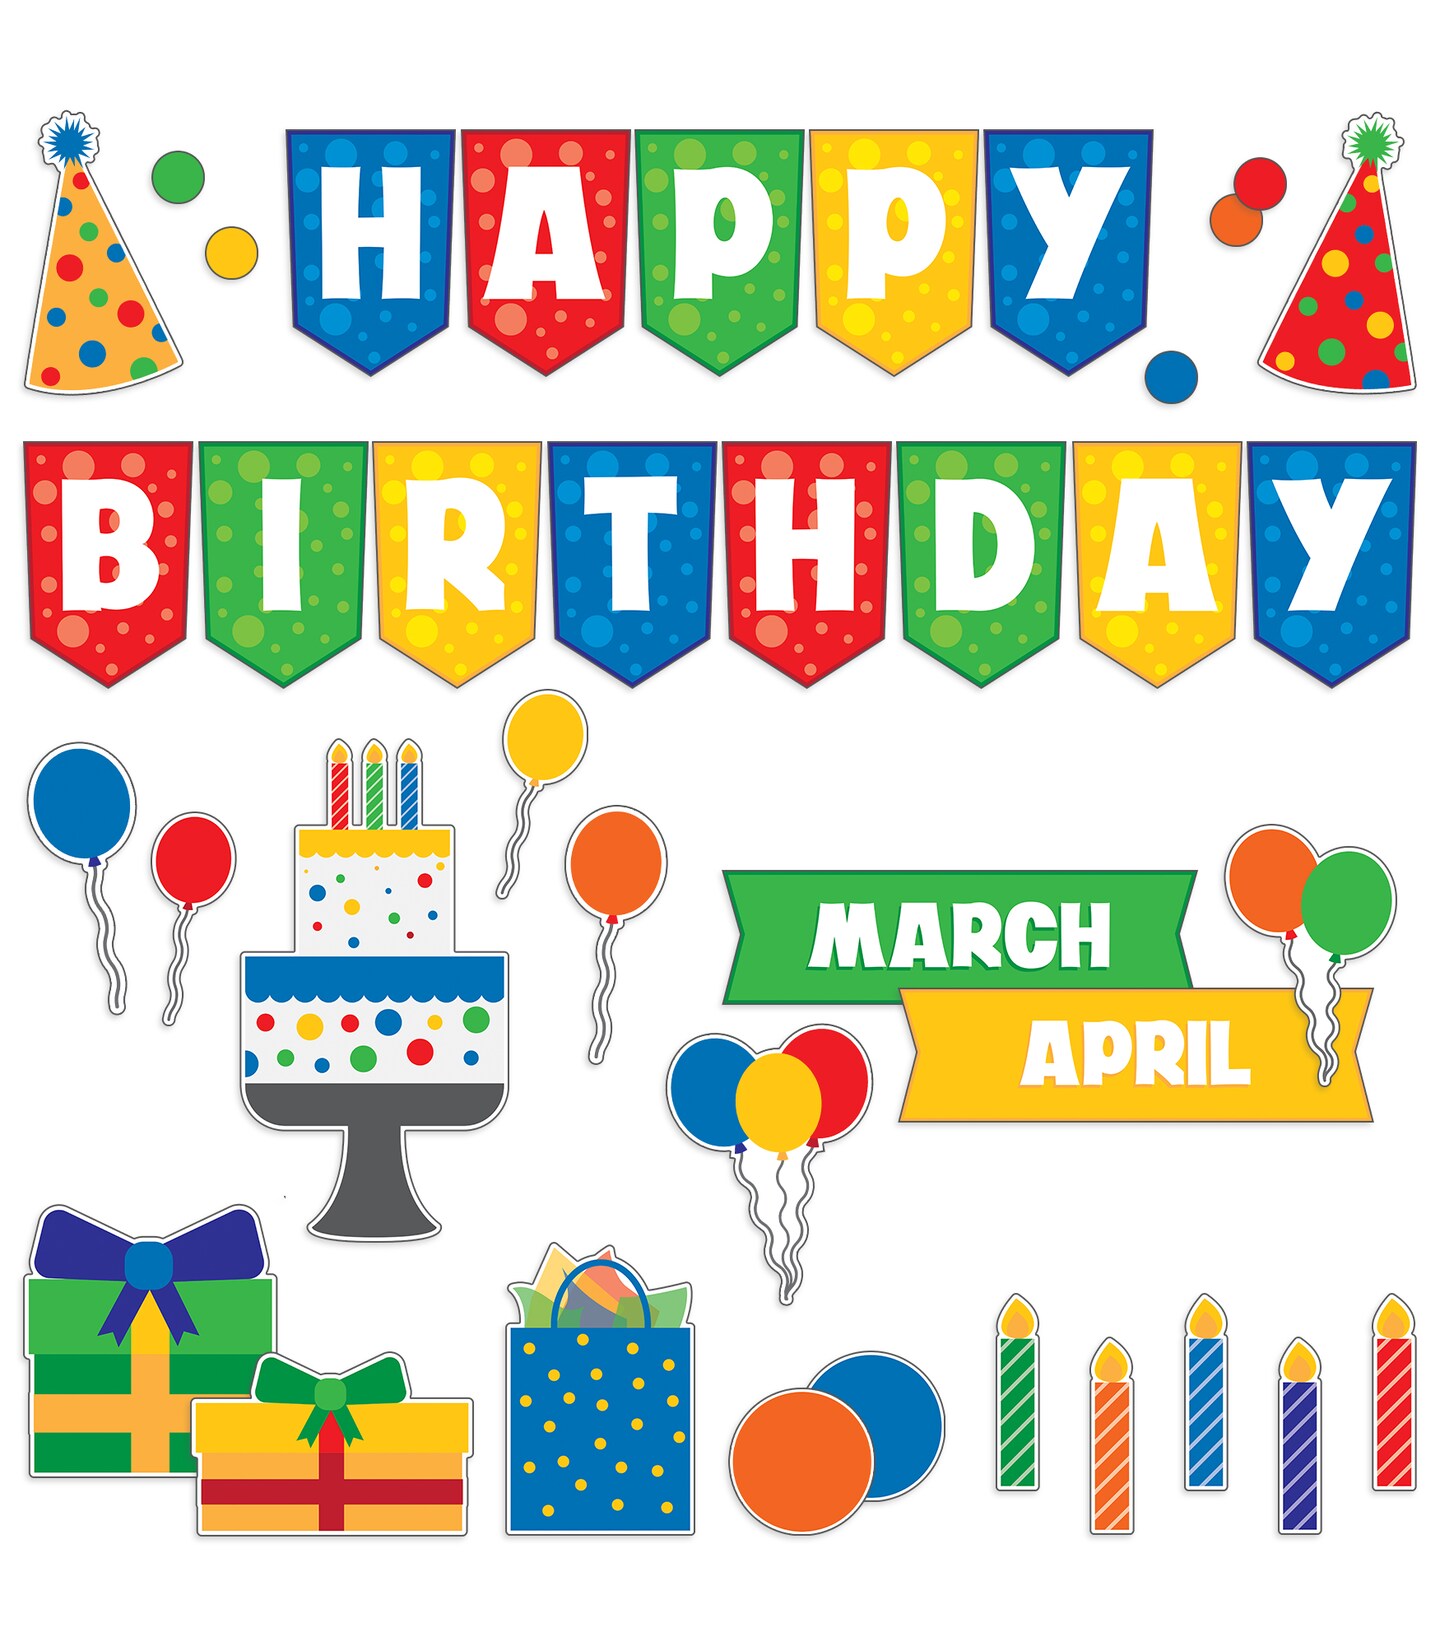 Carson Dellosa Birthday Fun Bulletin Board Set, Happy Birthday Banner, Monthly Birthday Headers, Birthday Balloons, Birthday Bulletin Board Cutouts, Party or Classroom D&#xE9;cor (106 Pc)